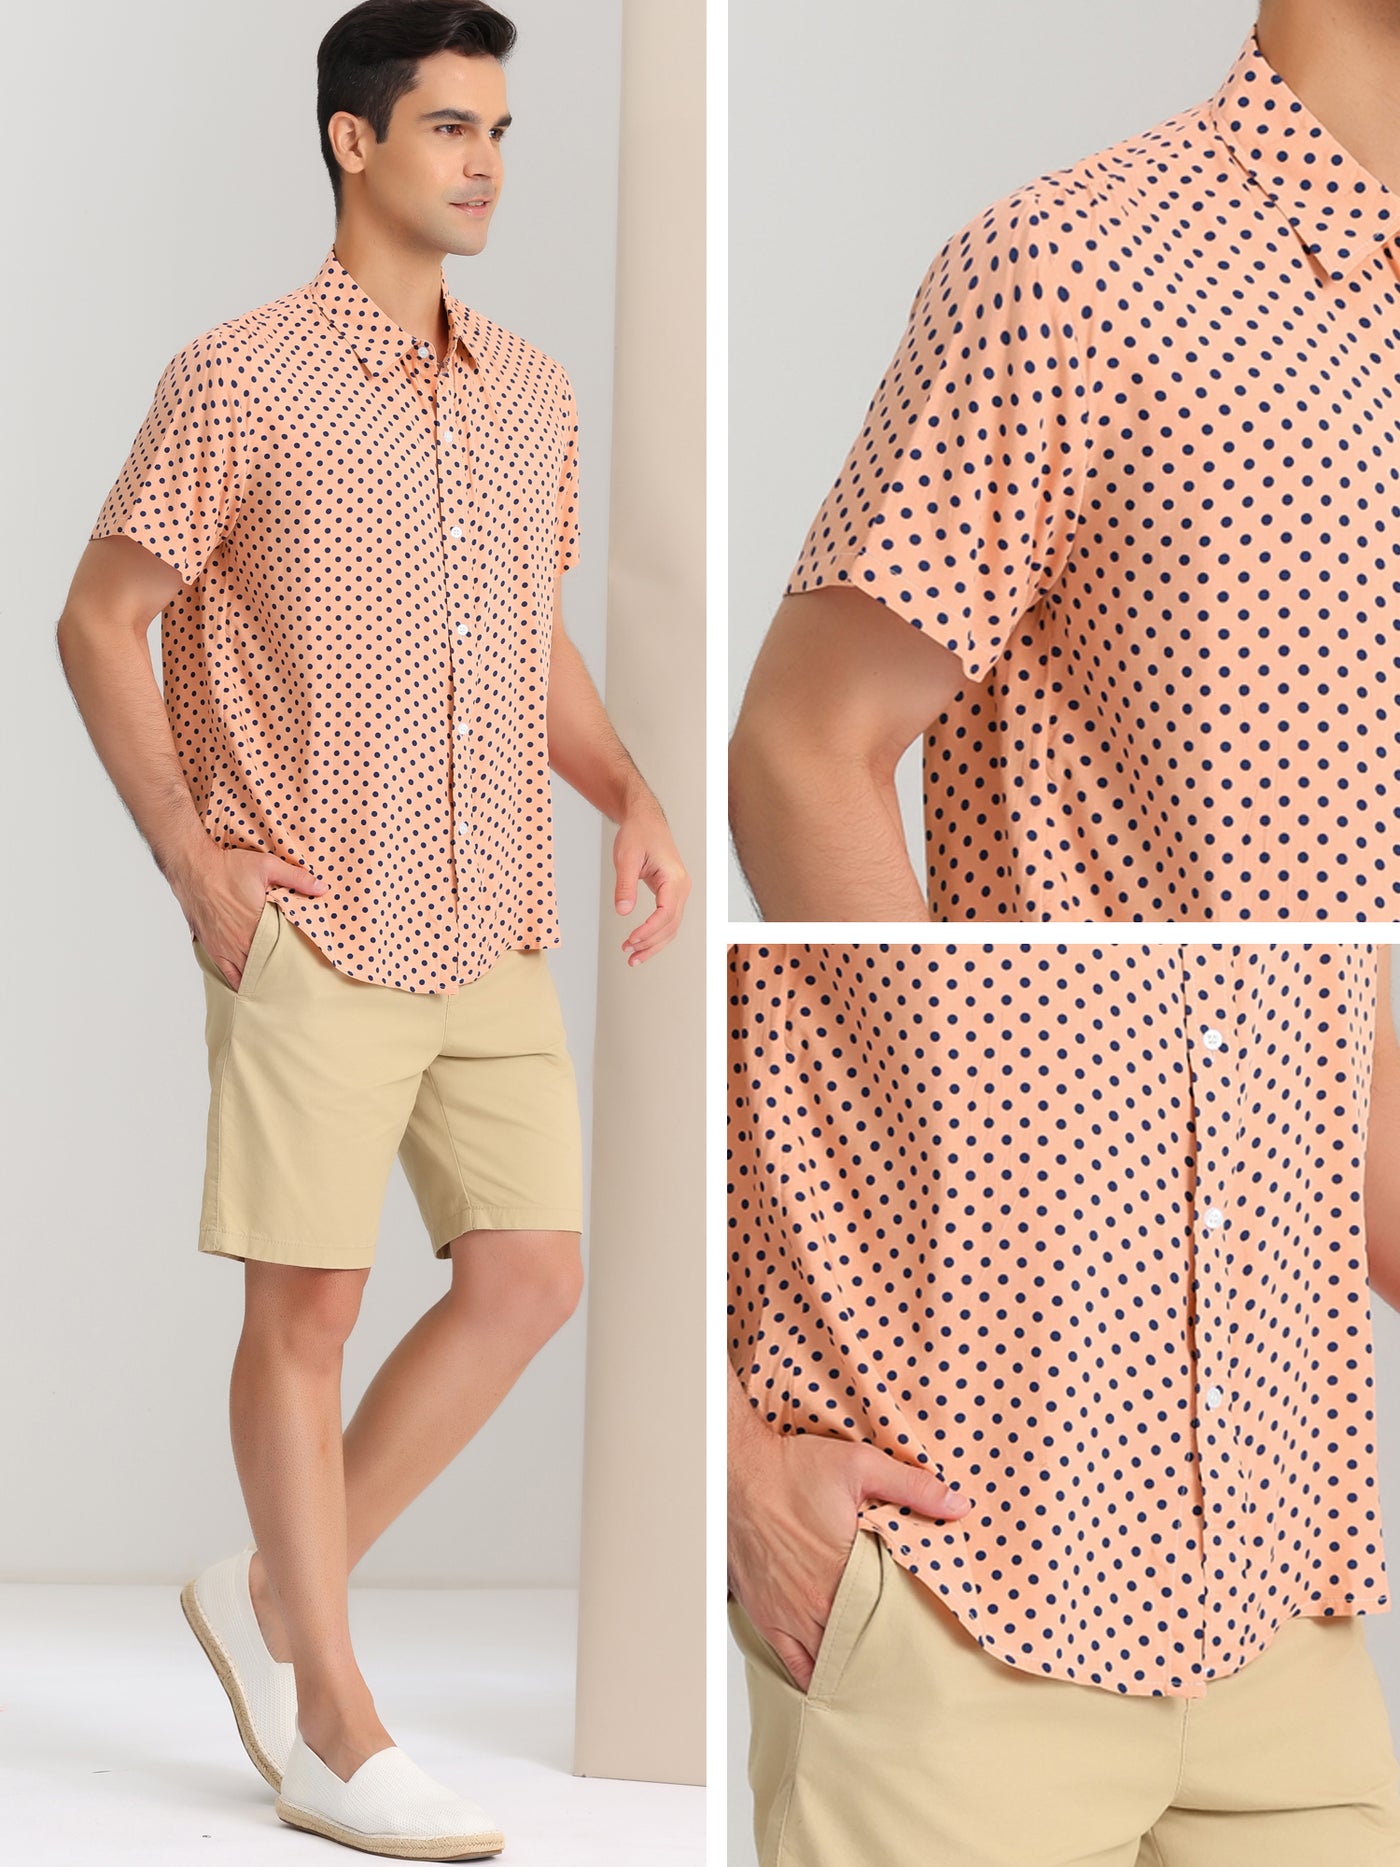 Bublédon Polka Dots Shirts for Men's Short Sleeves Regular Fit Summer Hawaiian Point Shirt